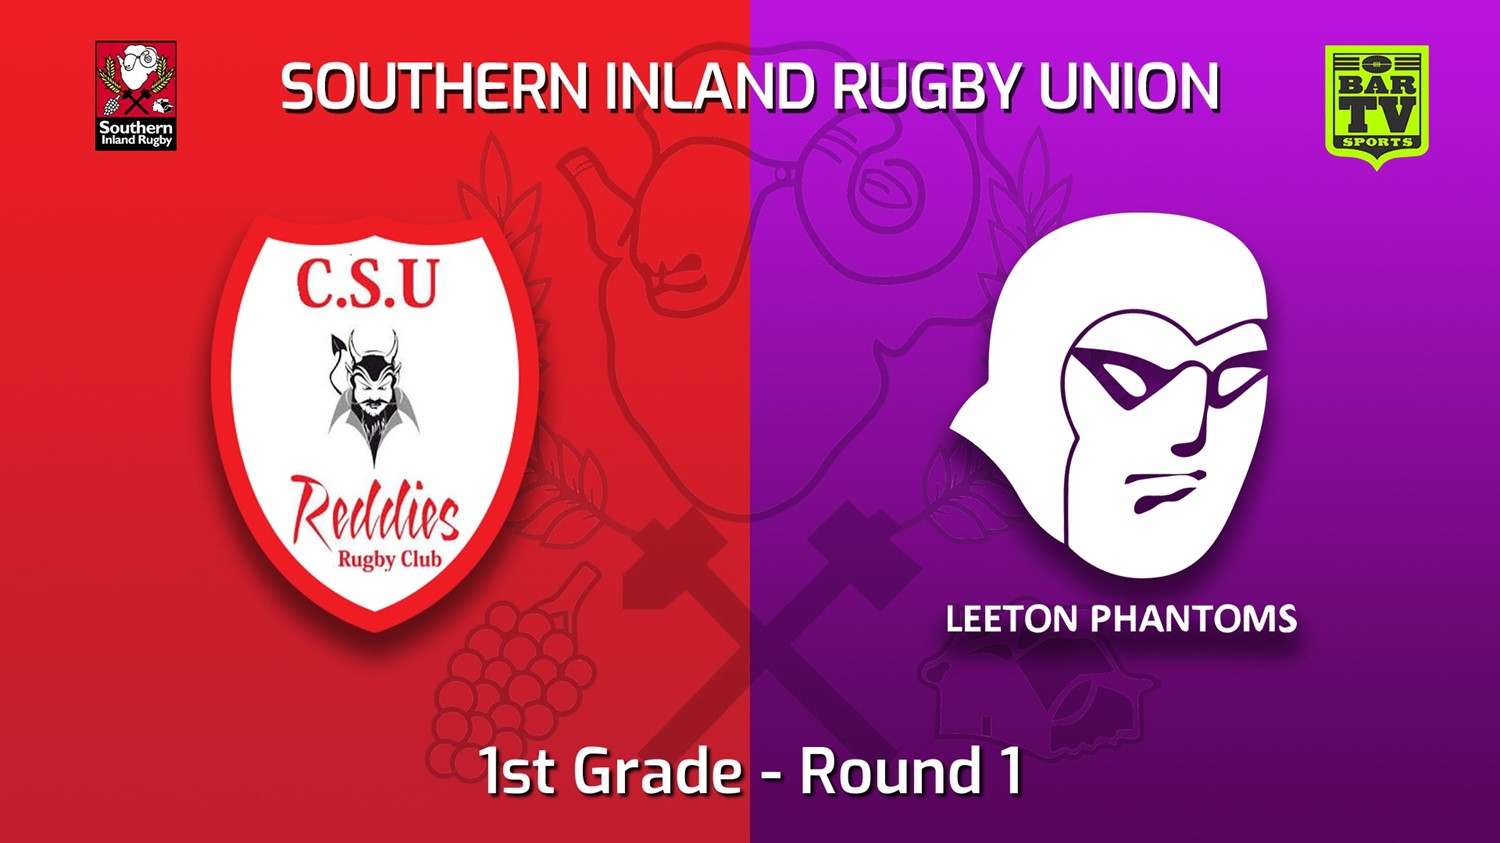 220402-Southern Inland Rugby Union Round 1 - 1st Grade - CSU Reddies v Leeton Phantoms (1) Slate Image